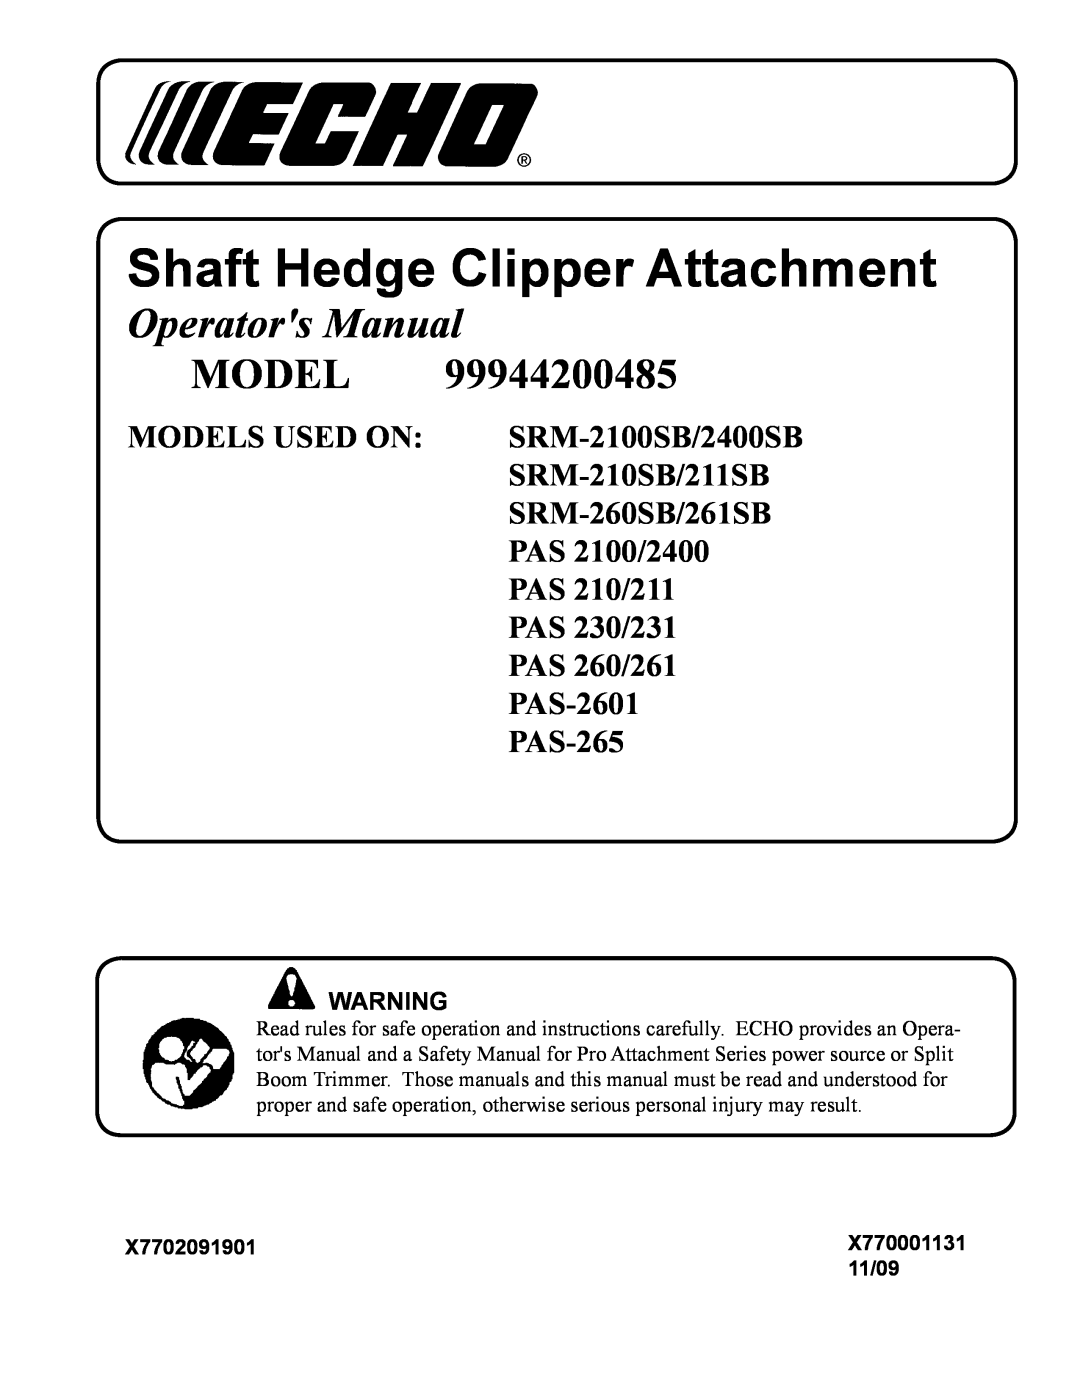 Echo 99944200485 manual Shaft Hedge Clipper Attachment, Operators Manual, Model 